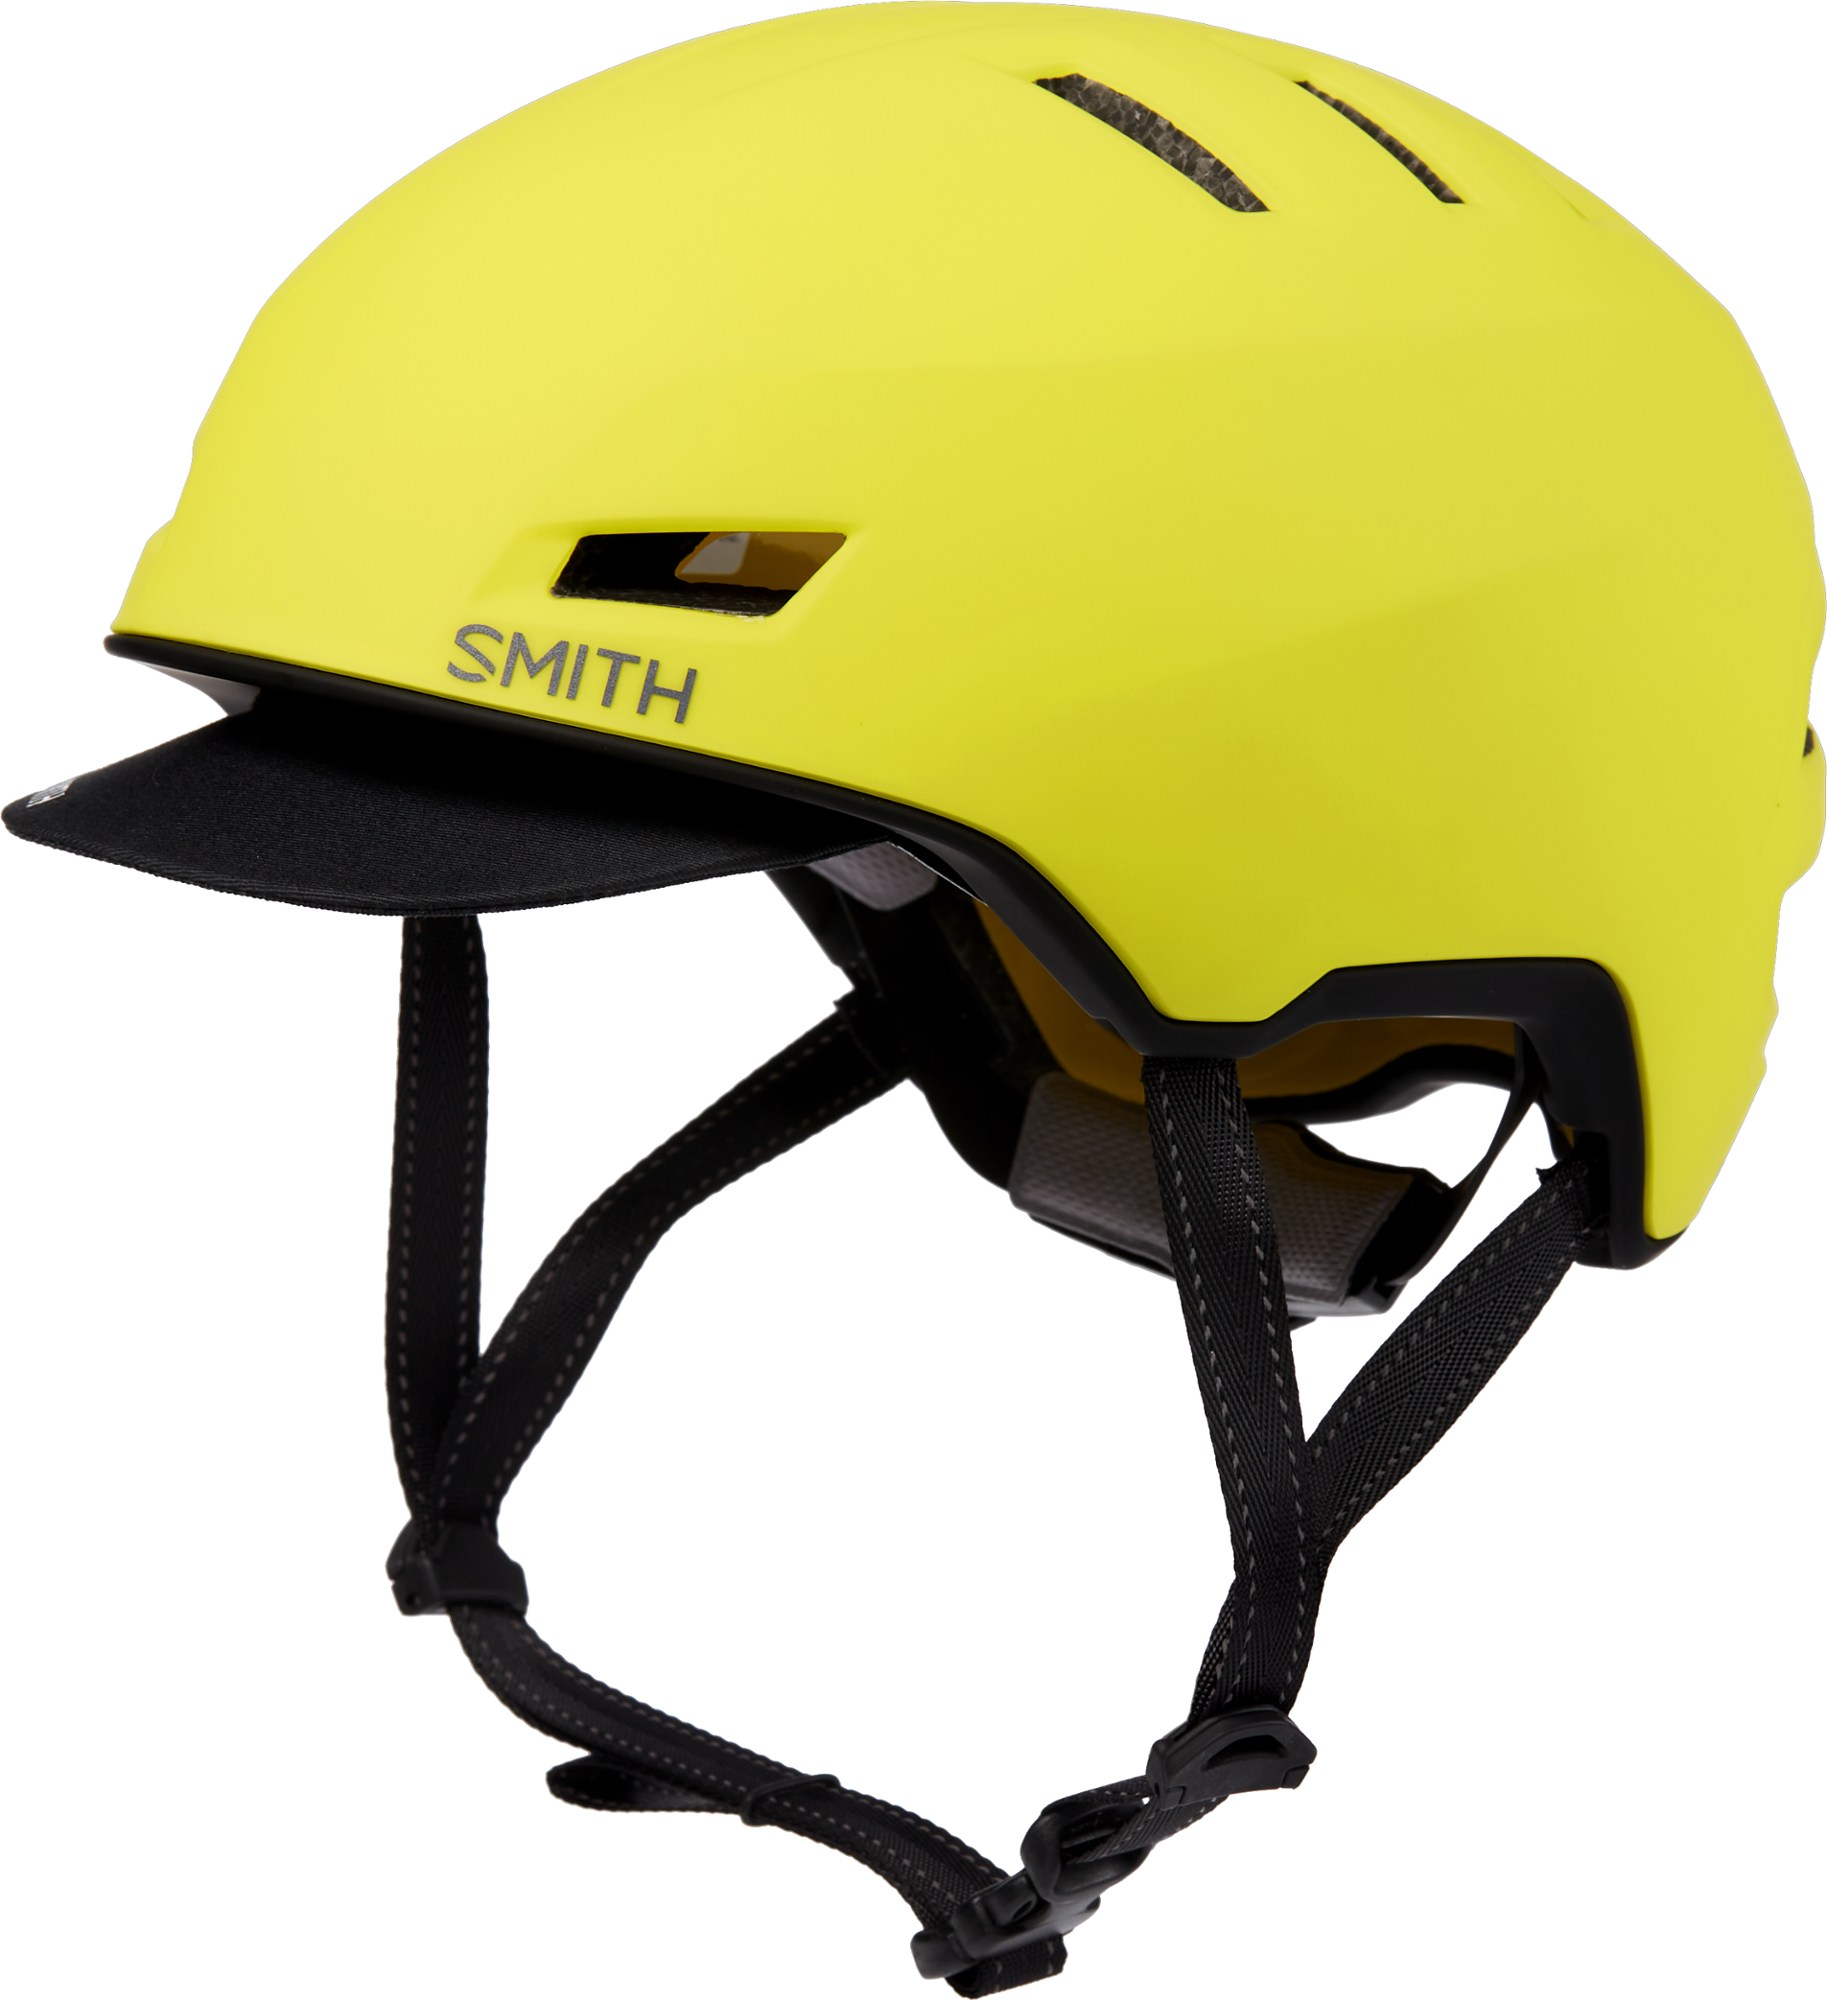 Велосипедный шлем Express MIPS Smith, желтый